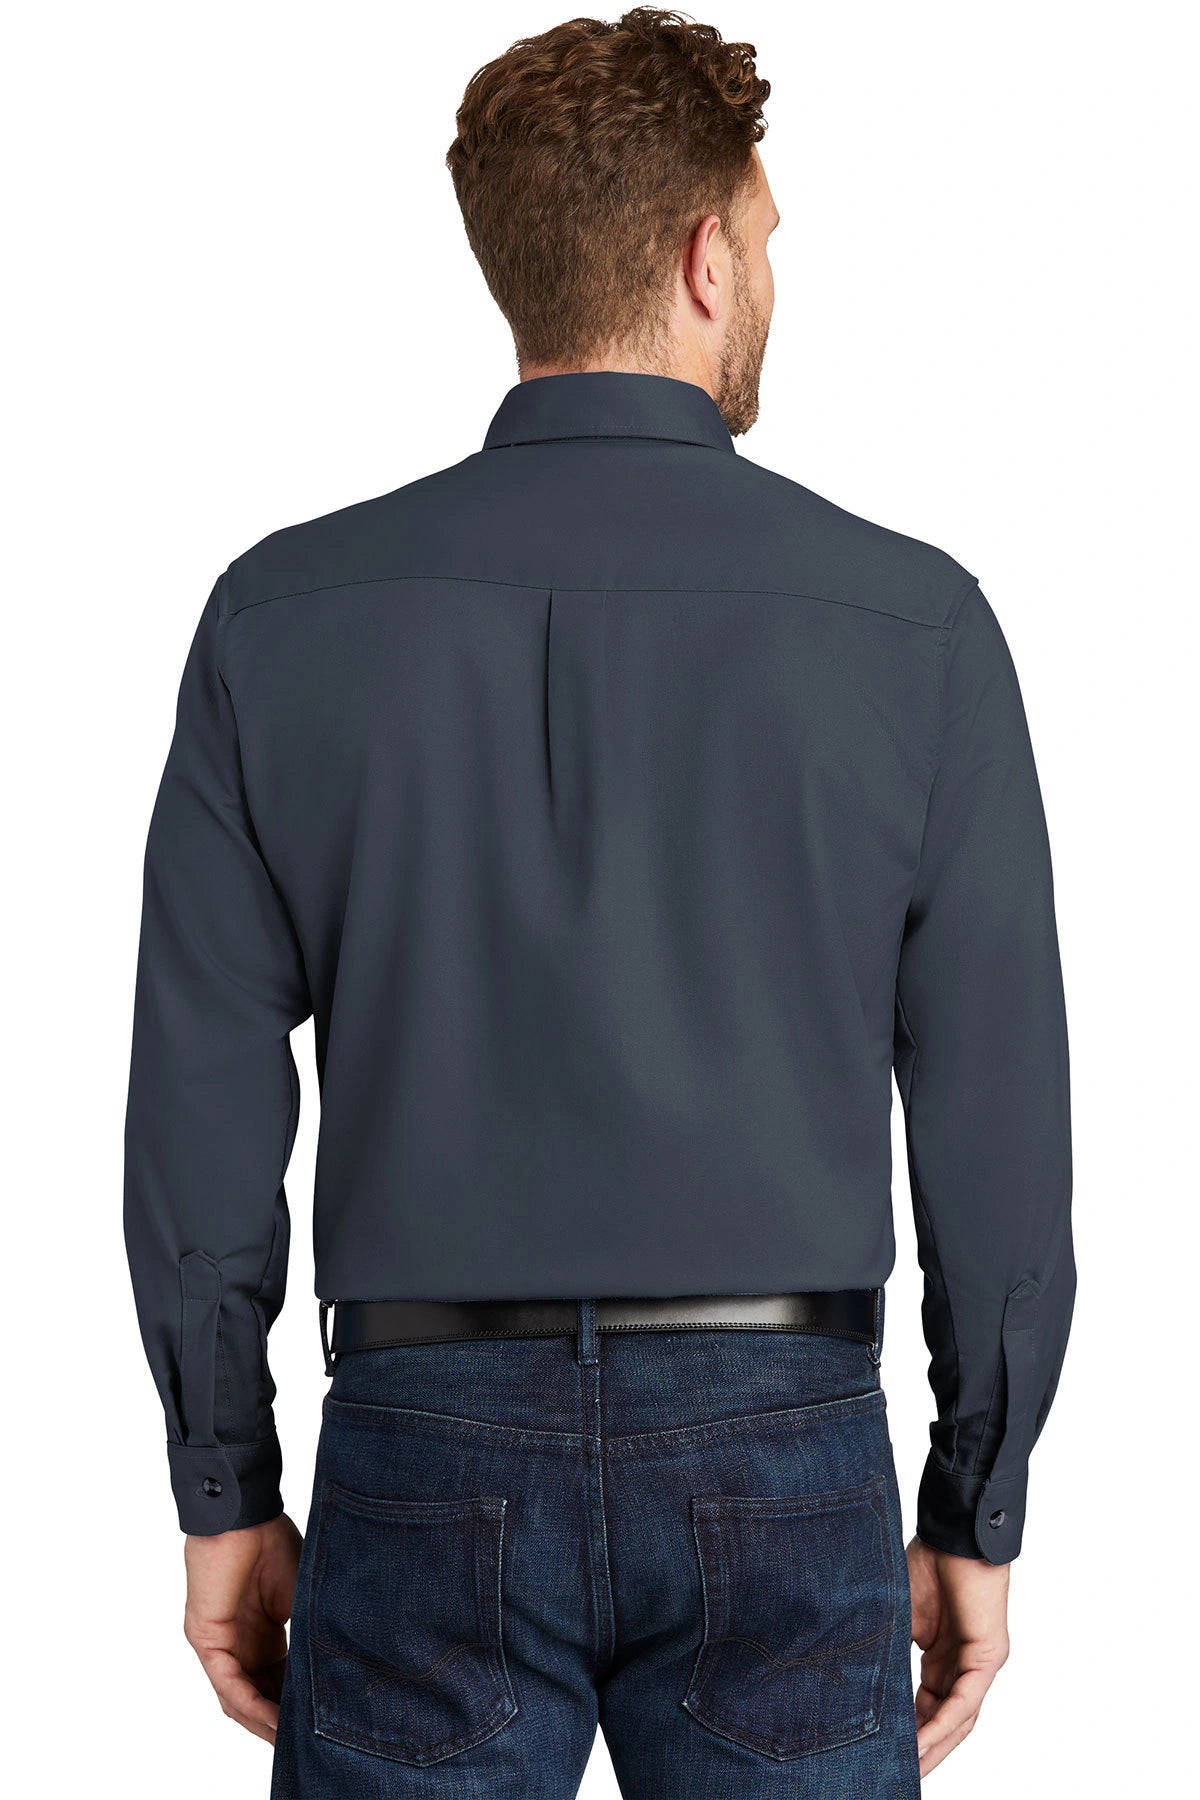 Bulwark® EXCEL FR® ComforTouch® Uniform Shirt Flame Resistant SLU2